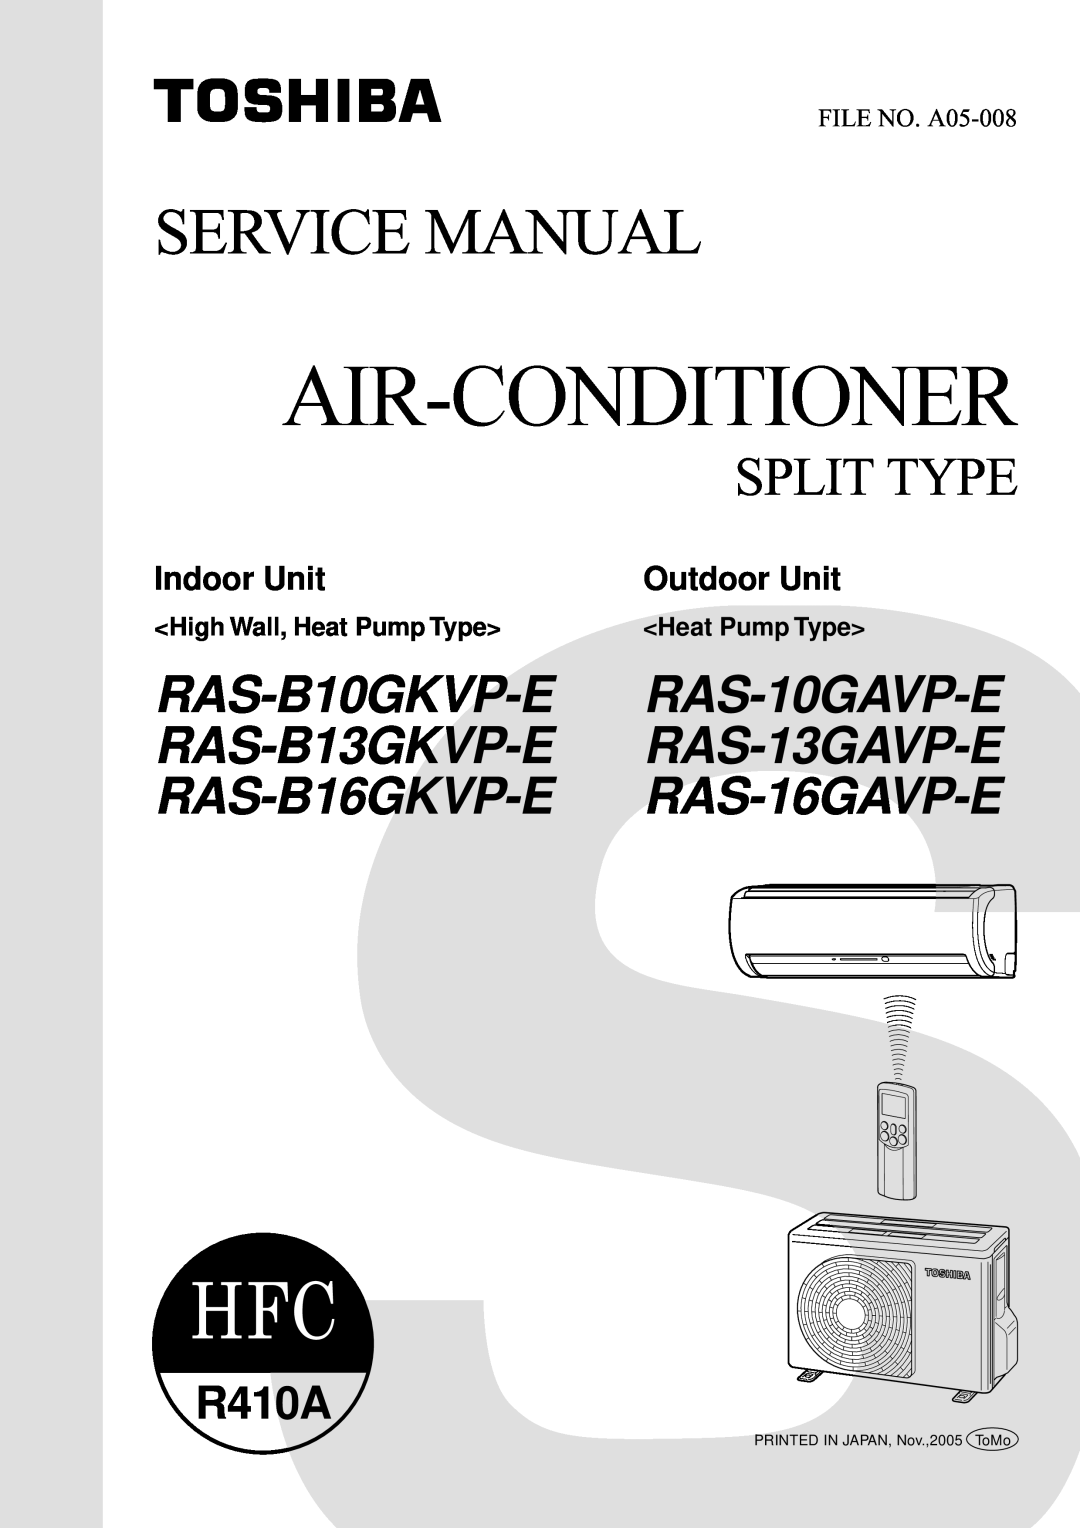 Toshiba RAS-B13GKVP-E service manual Indoor Unit, Outdoor Unit, High Wall, Heat Pump Type, Service Manual, Split Type 